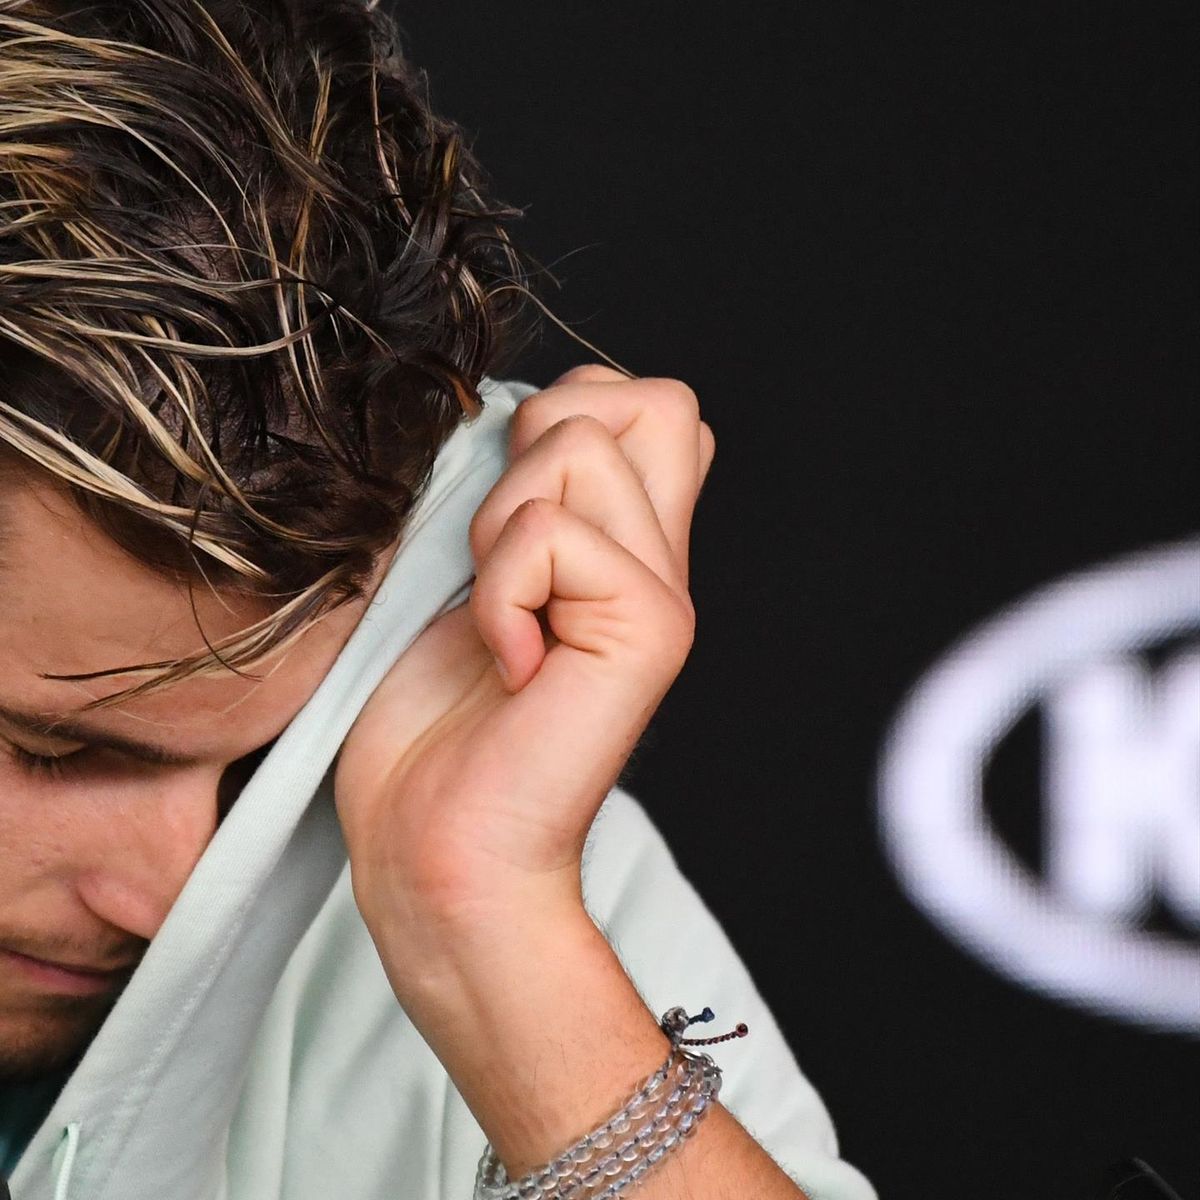 Tennis Rafael Nadal outlasts Novak Djokovic in French Open epic to reach  semifinal  Newshub